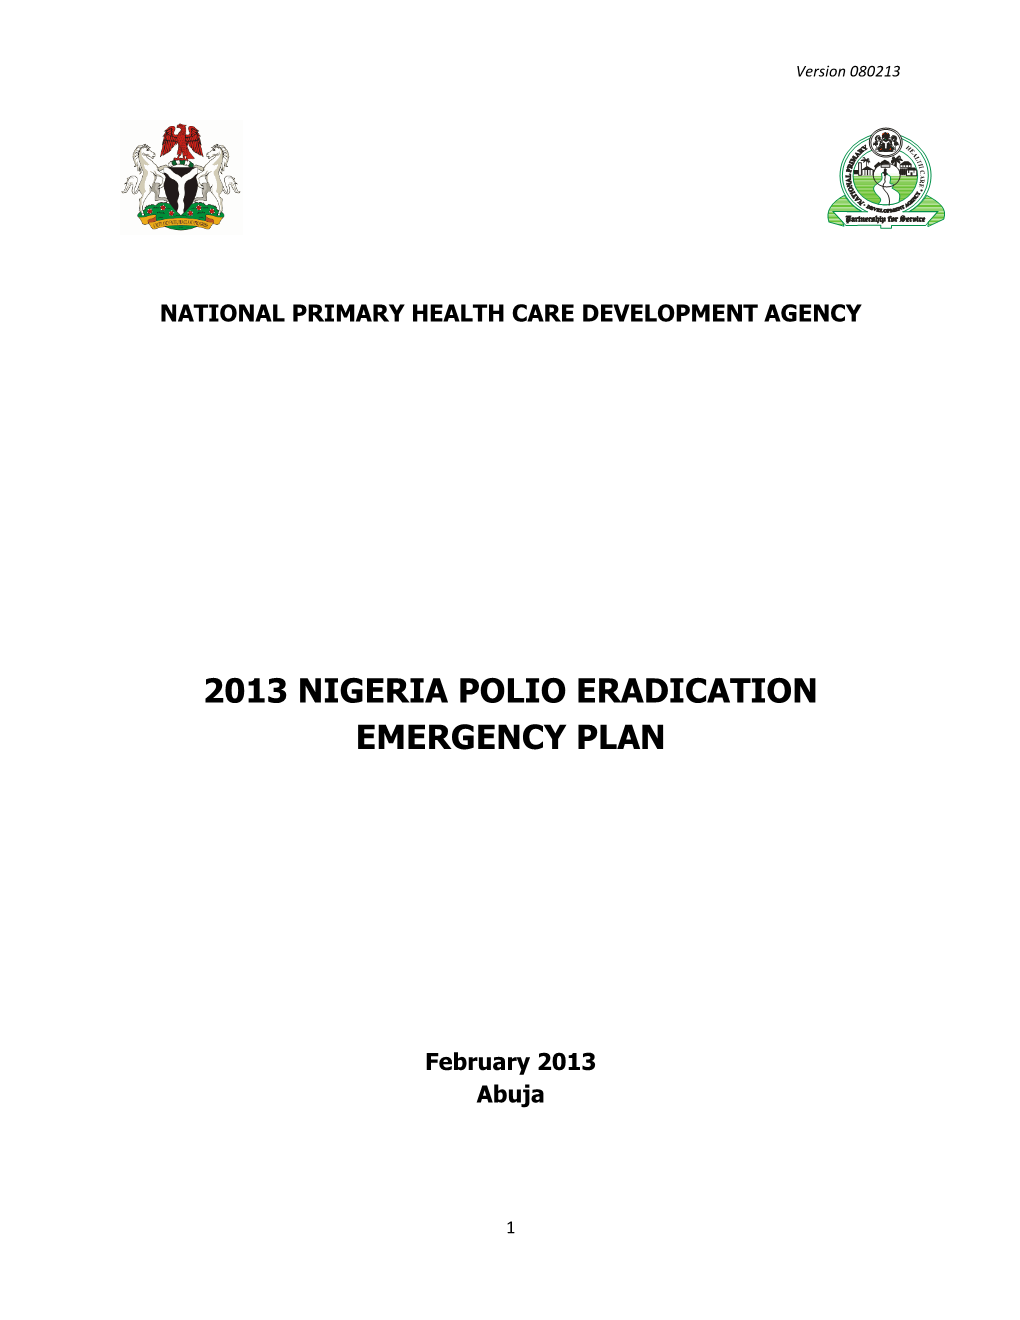 2013 Nigeria Polio Eradication Emergency Plan